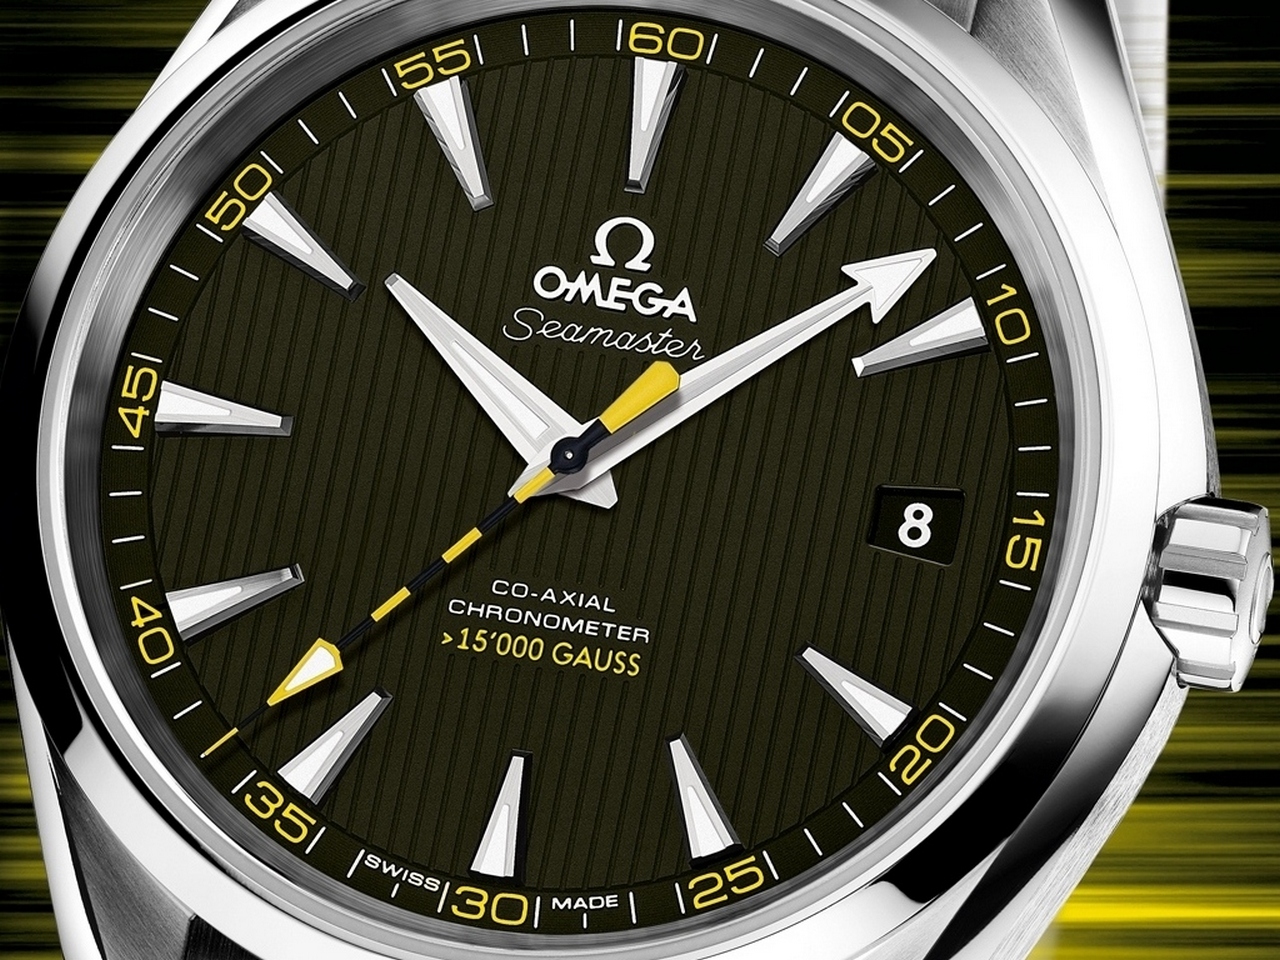 Omega Seamaster Aqua Terra _15.000 Gauss_0-100_3 - Copia (2)